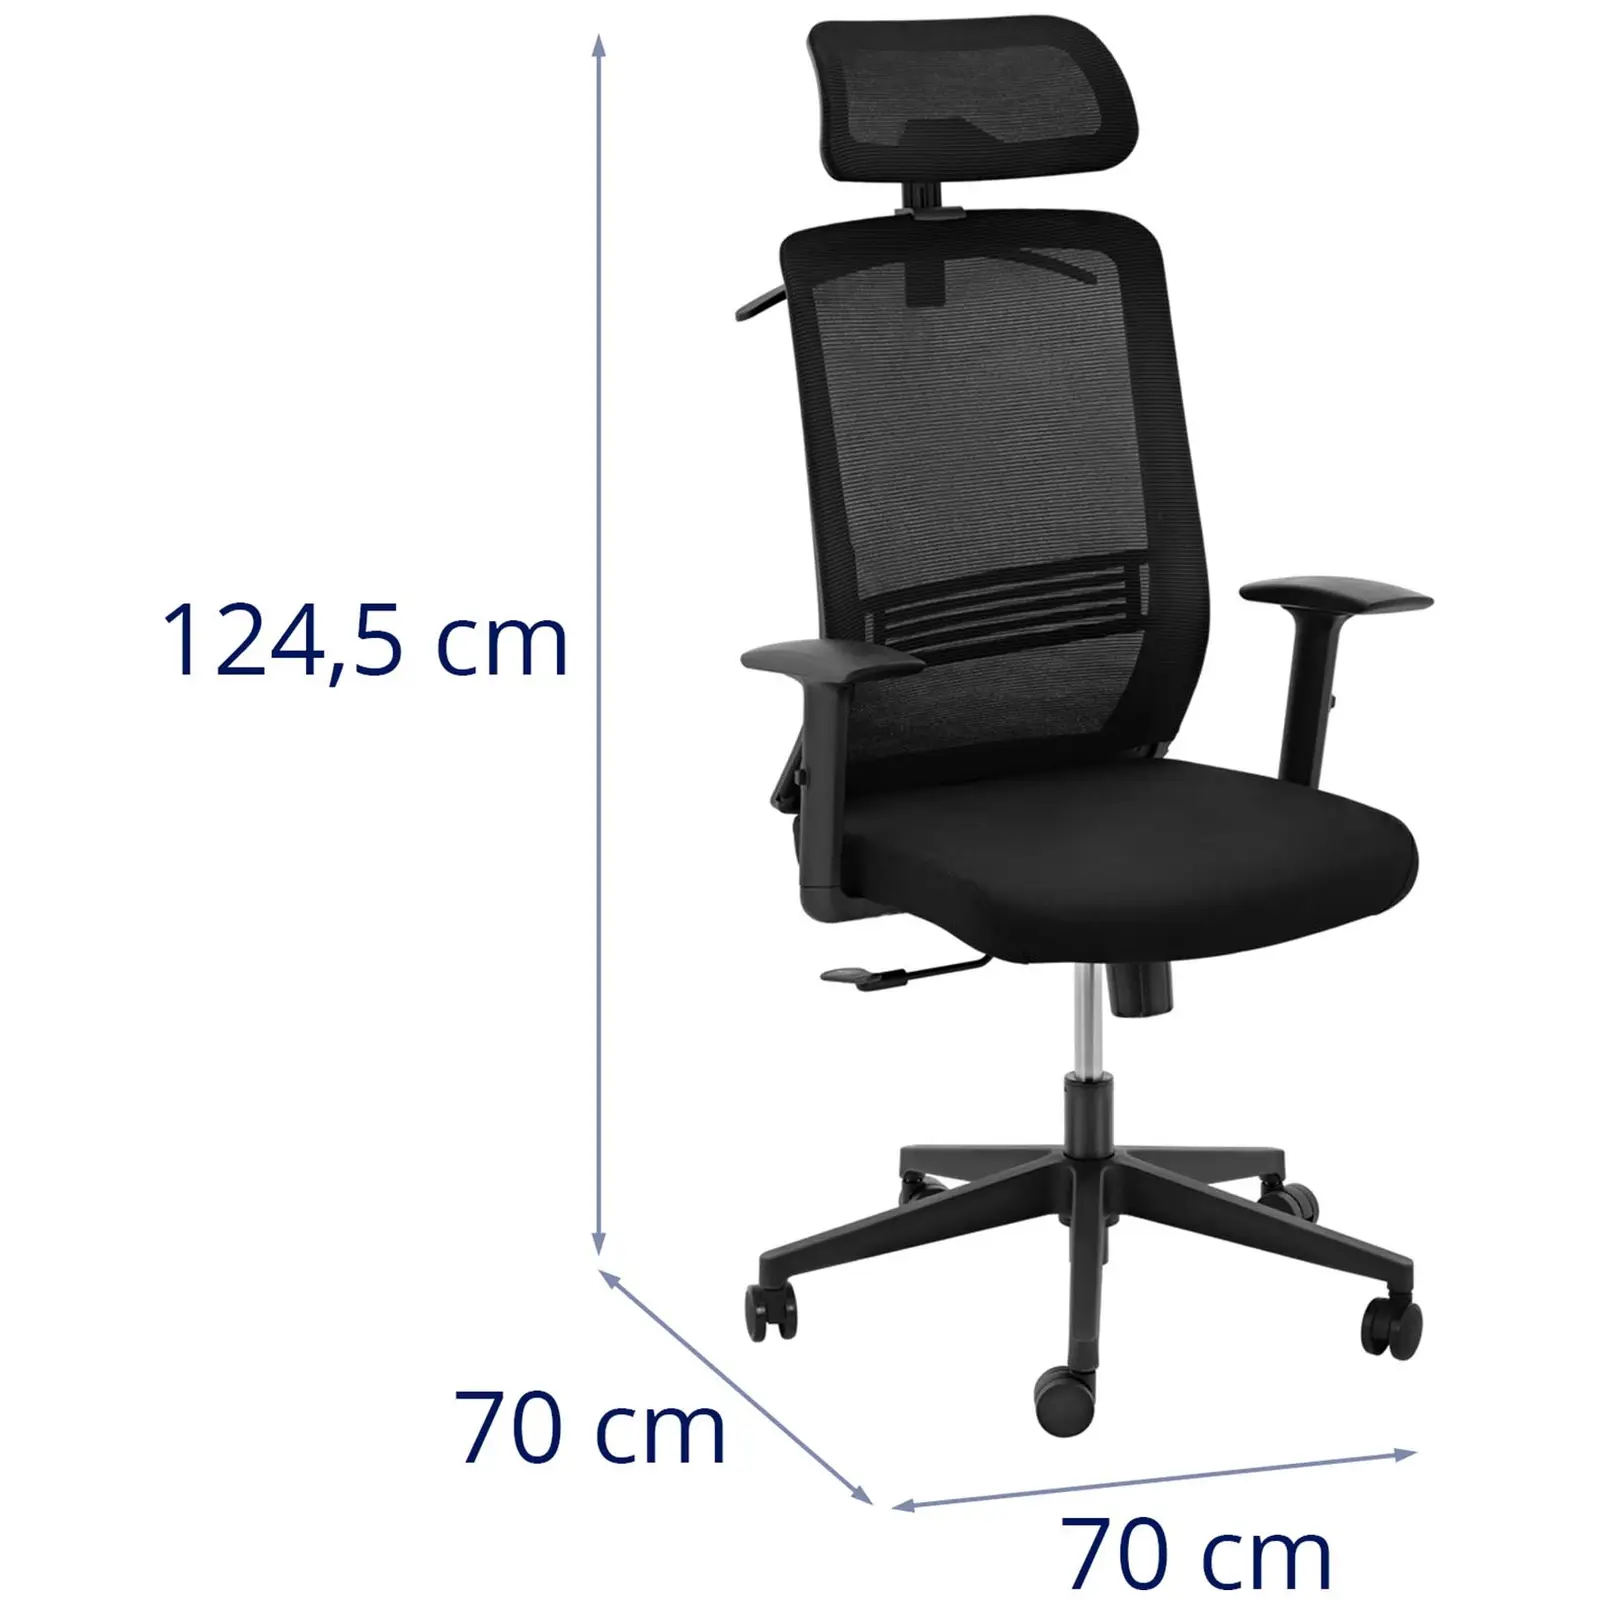 Silla de escritorio - respaldo de red - reposacabezas - asiento de 50 x 61 cm - hasta 150 kg - negra